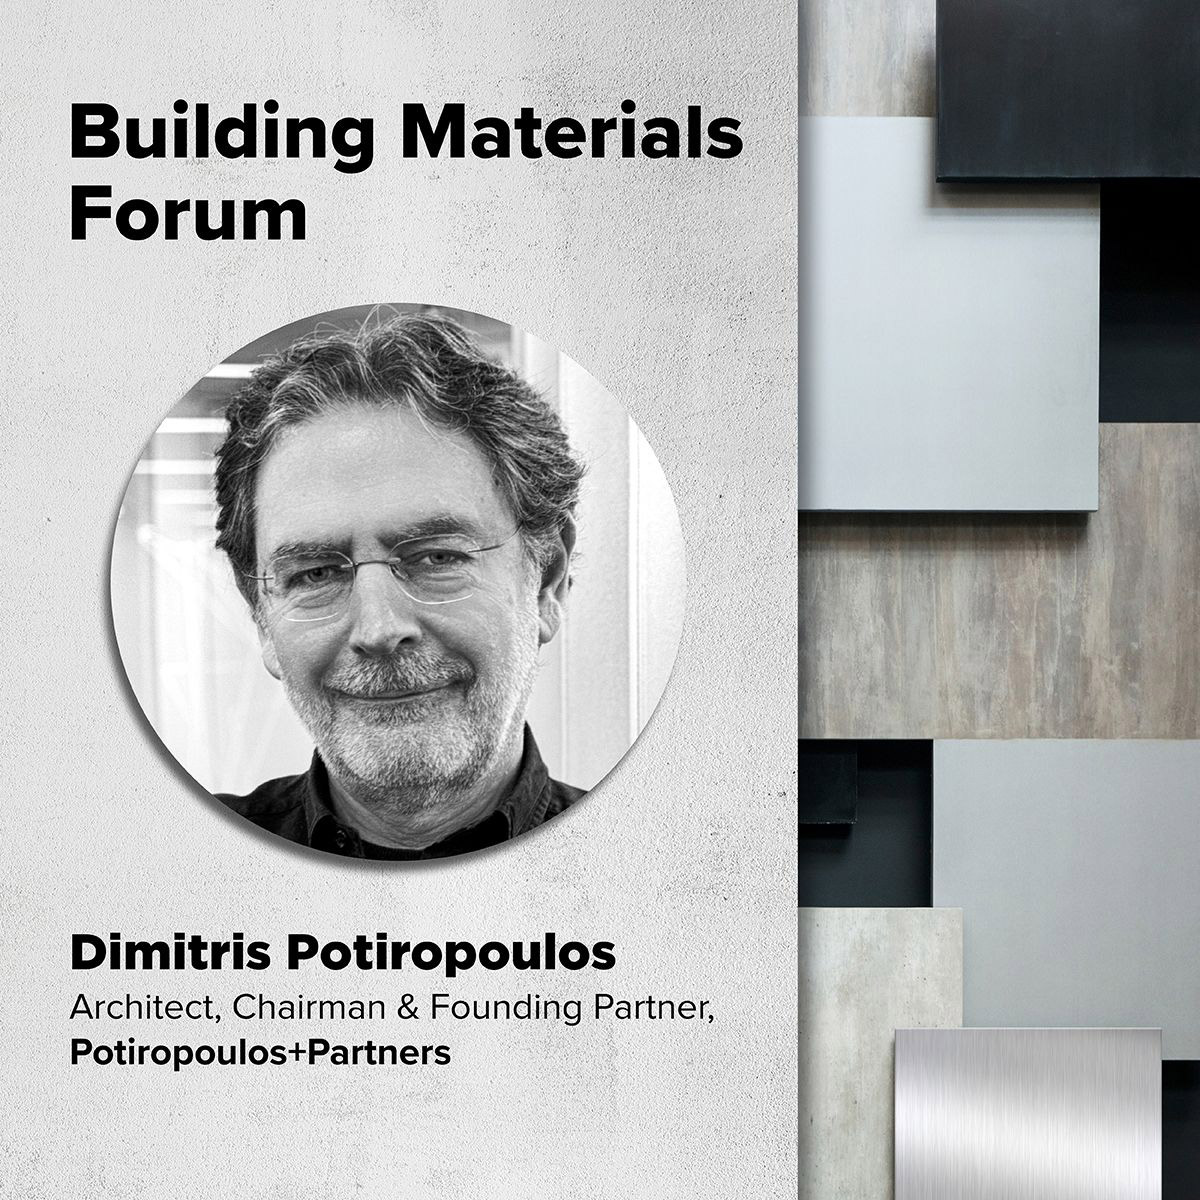 Building Materials Forum: O Δημήτρης Ποτηρόπουλος μιλά για την αντιστάθμιση τεχνολογίας και φύσης στην αρχιτεκτονική